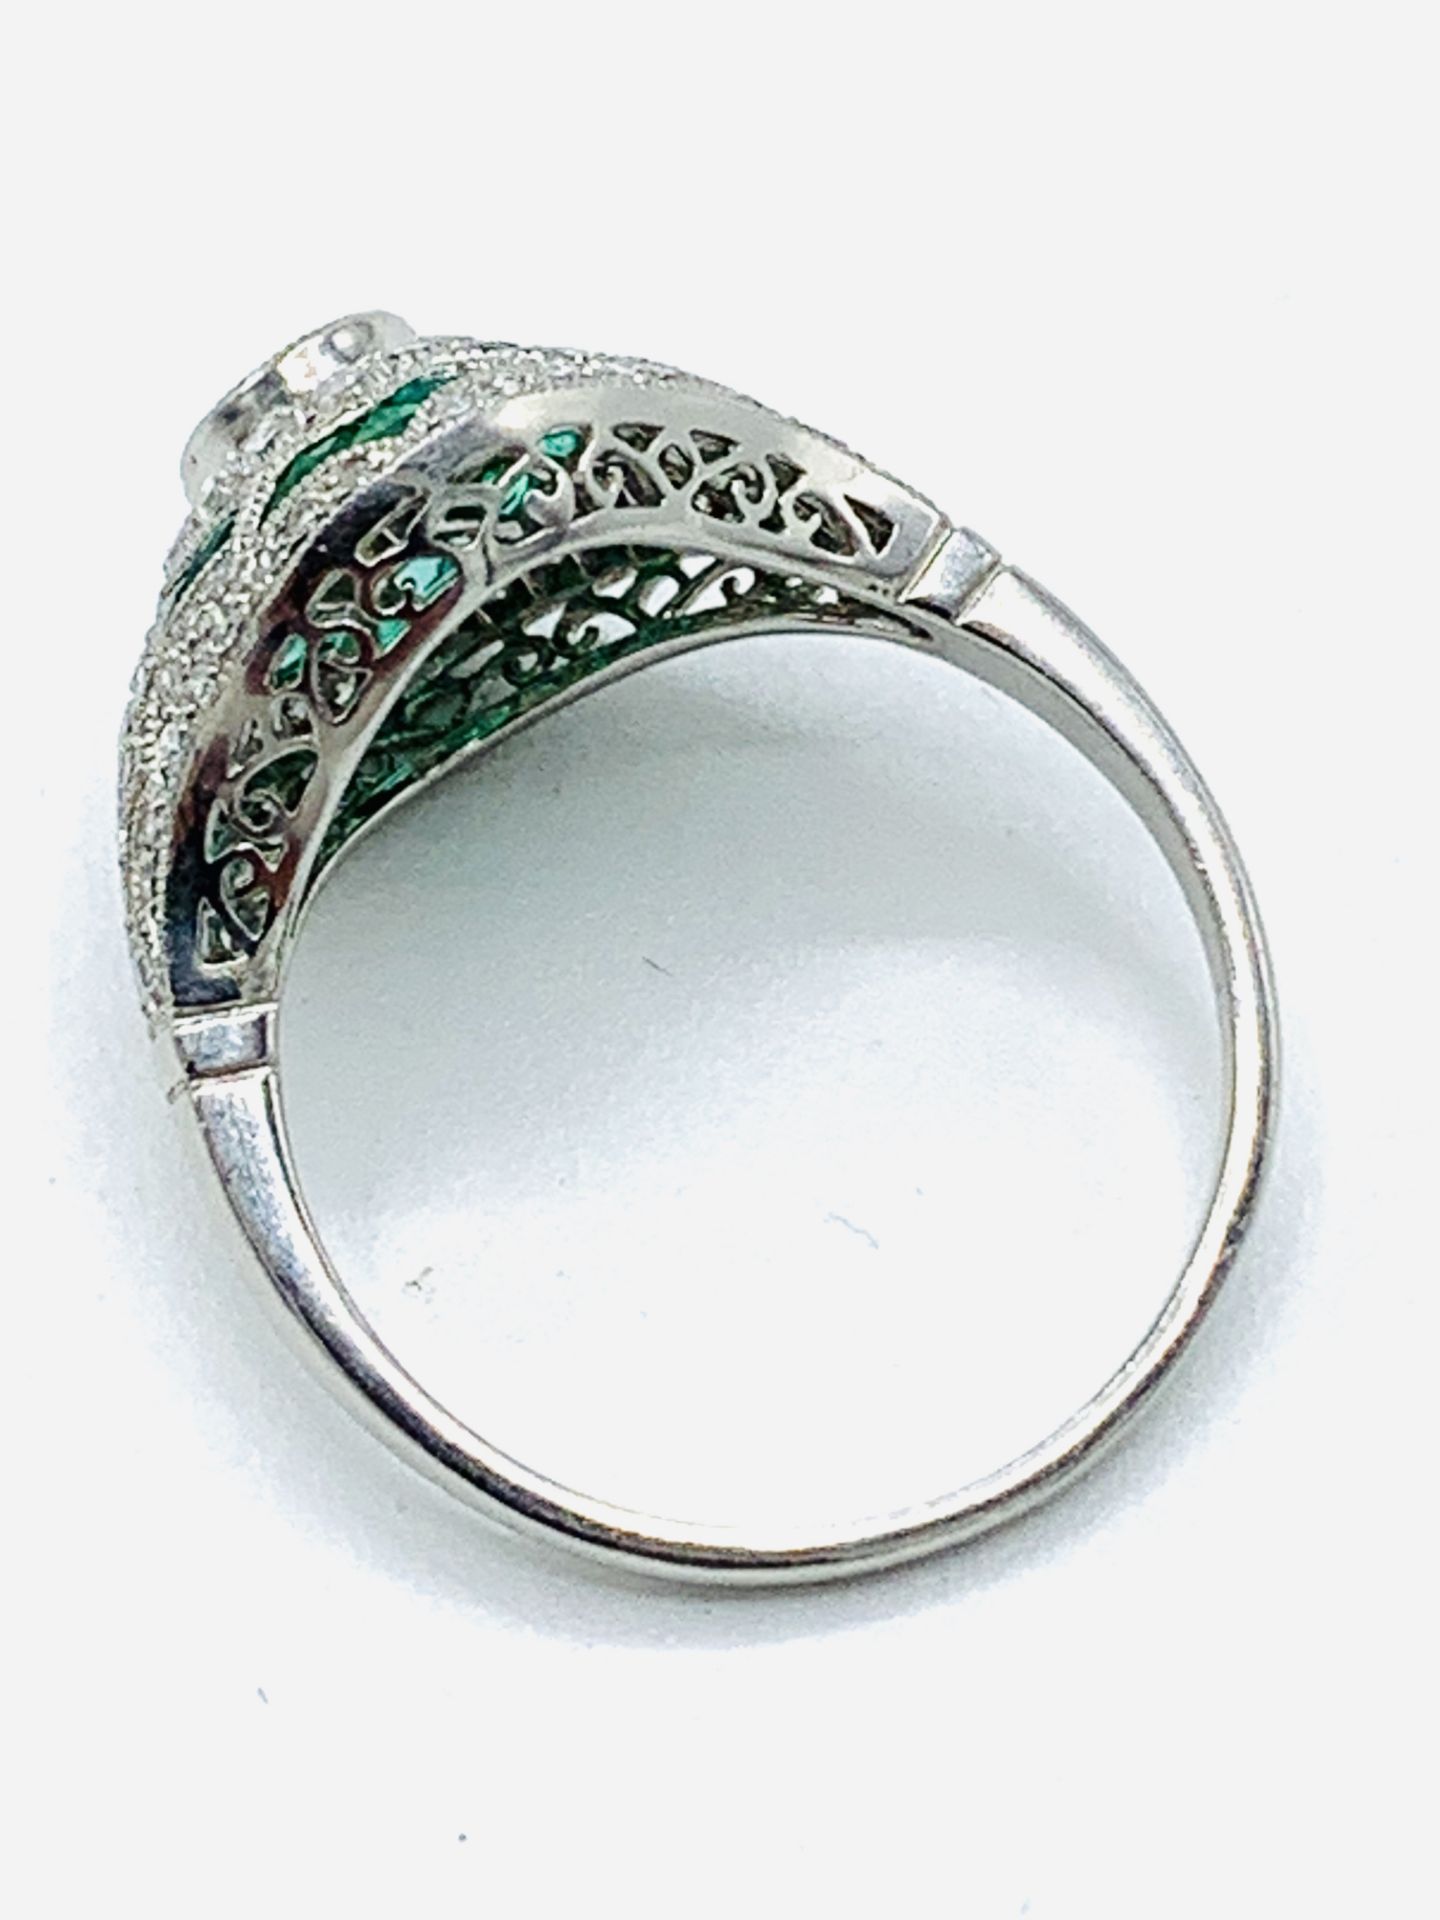 Platinum emerald and diamond ring - Image 5 of 5